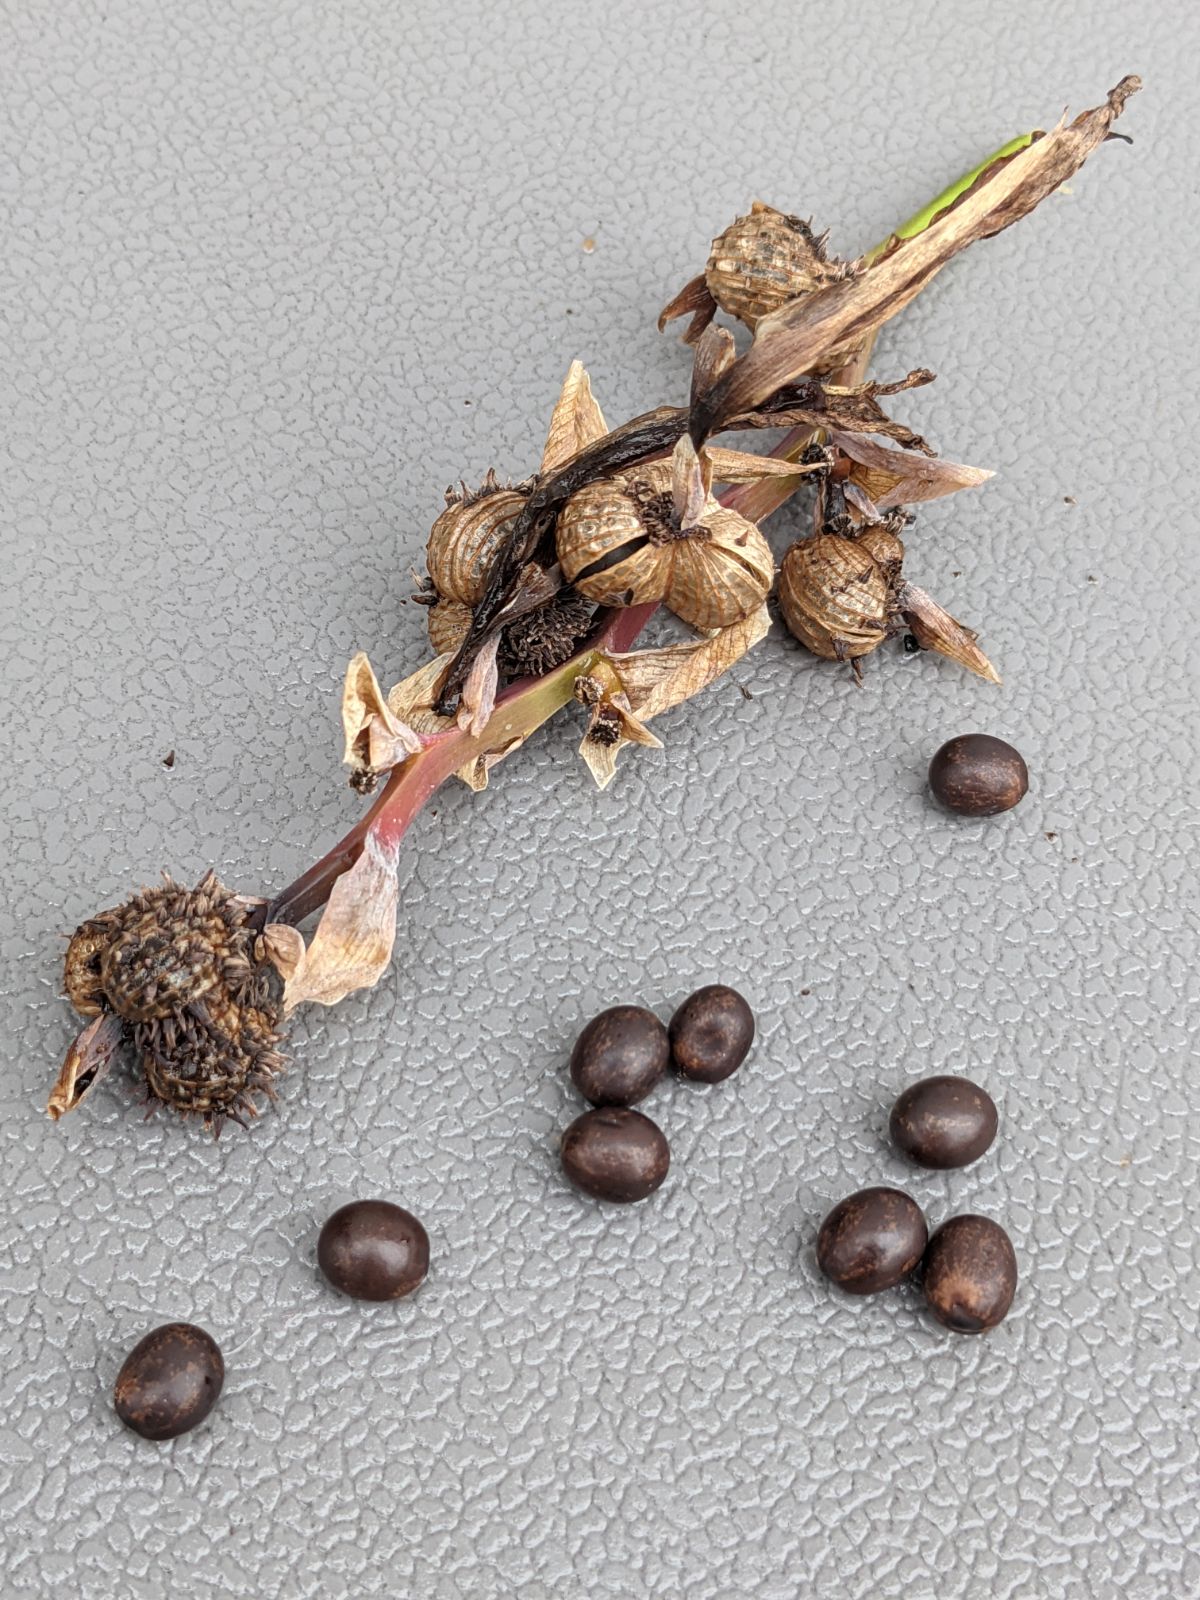 Canna lily seed pod and mature canna seeds